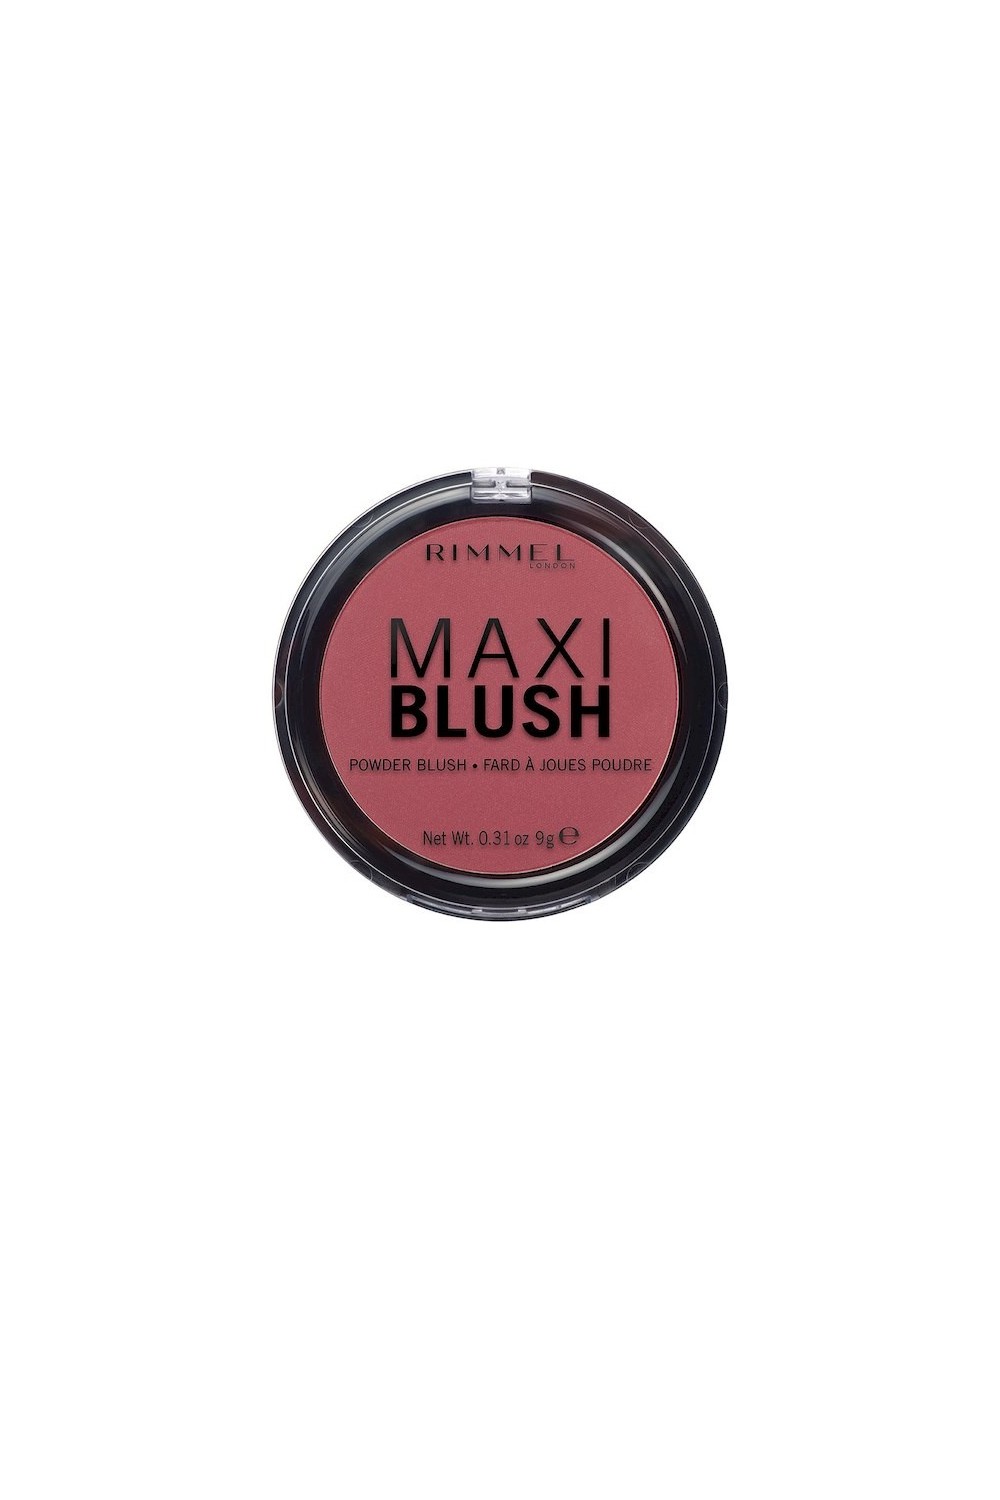 Rimmel London Maxi Blush Powder Blush 005 Rendez Vouz 9g